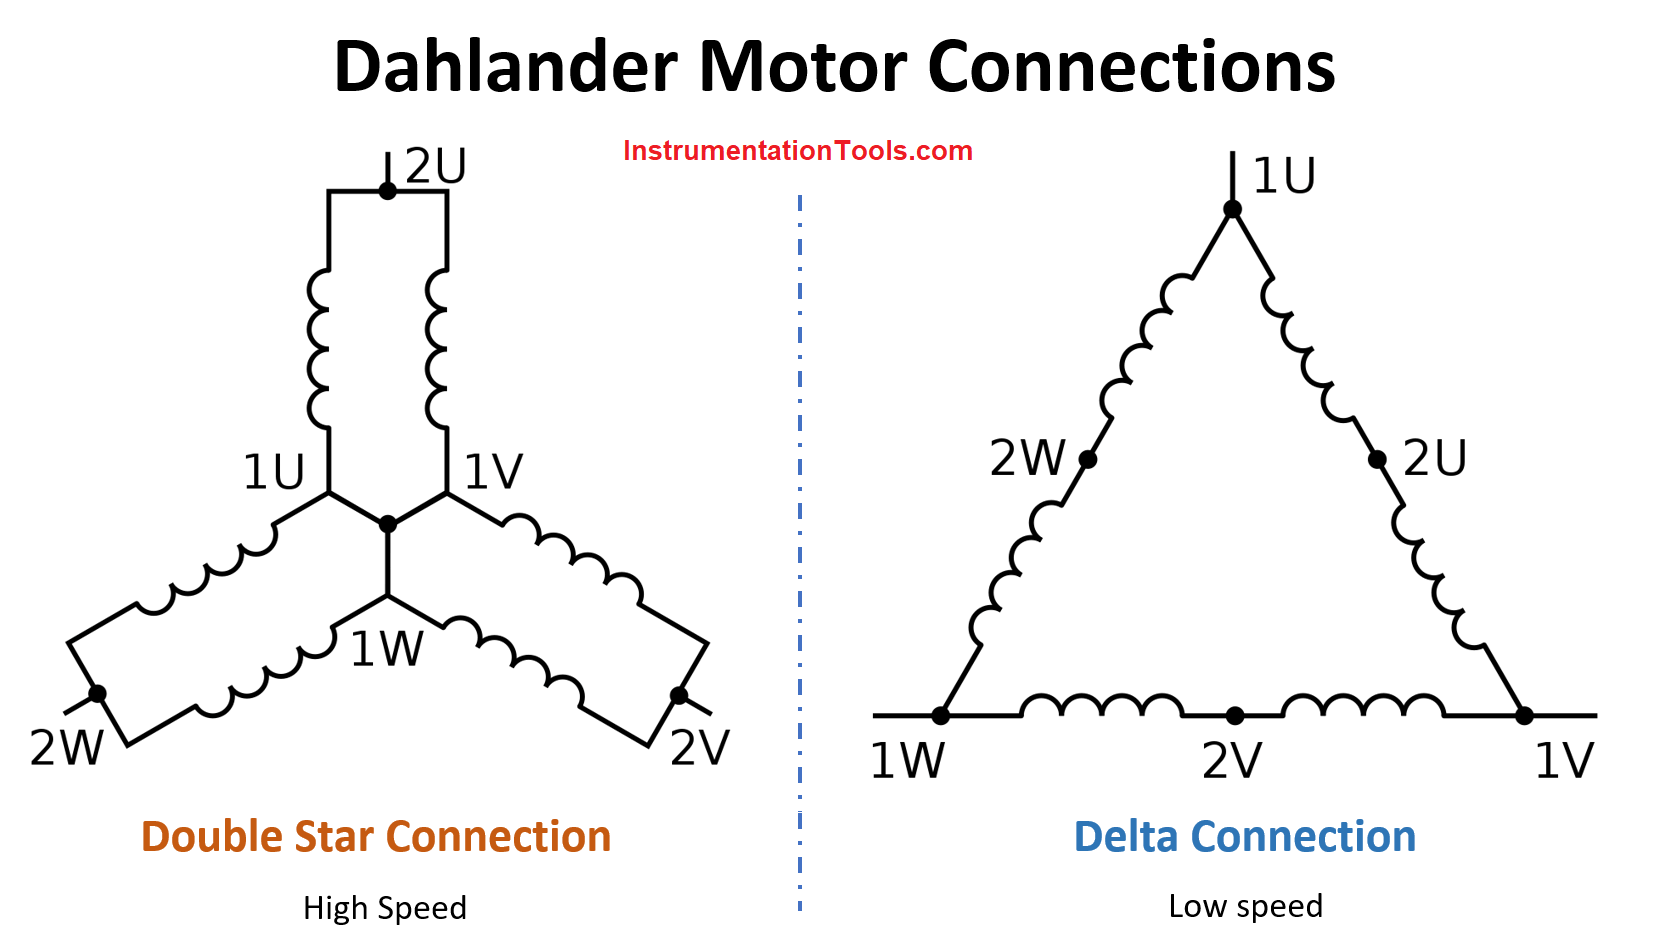 Dahlander Motor Connections